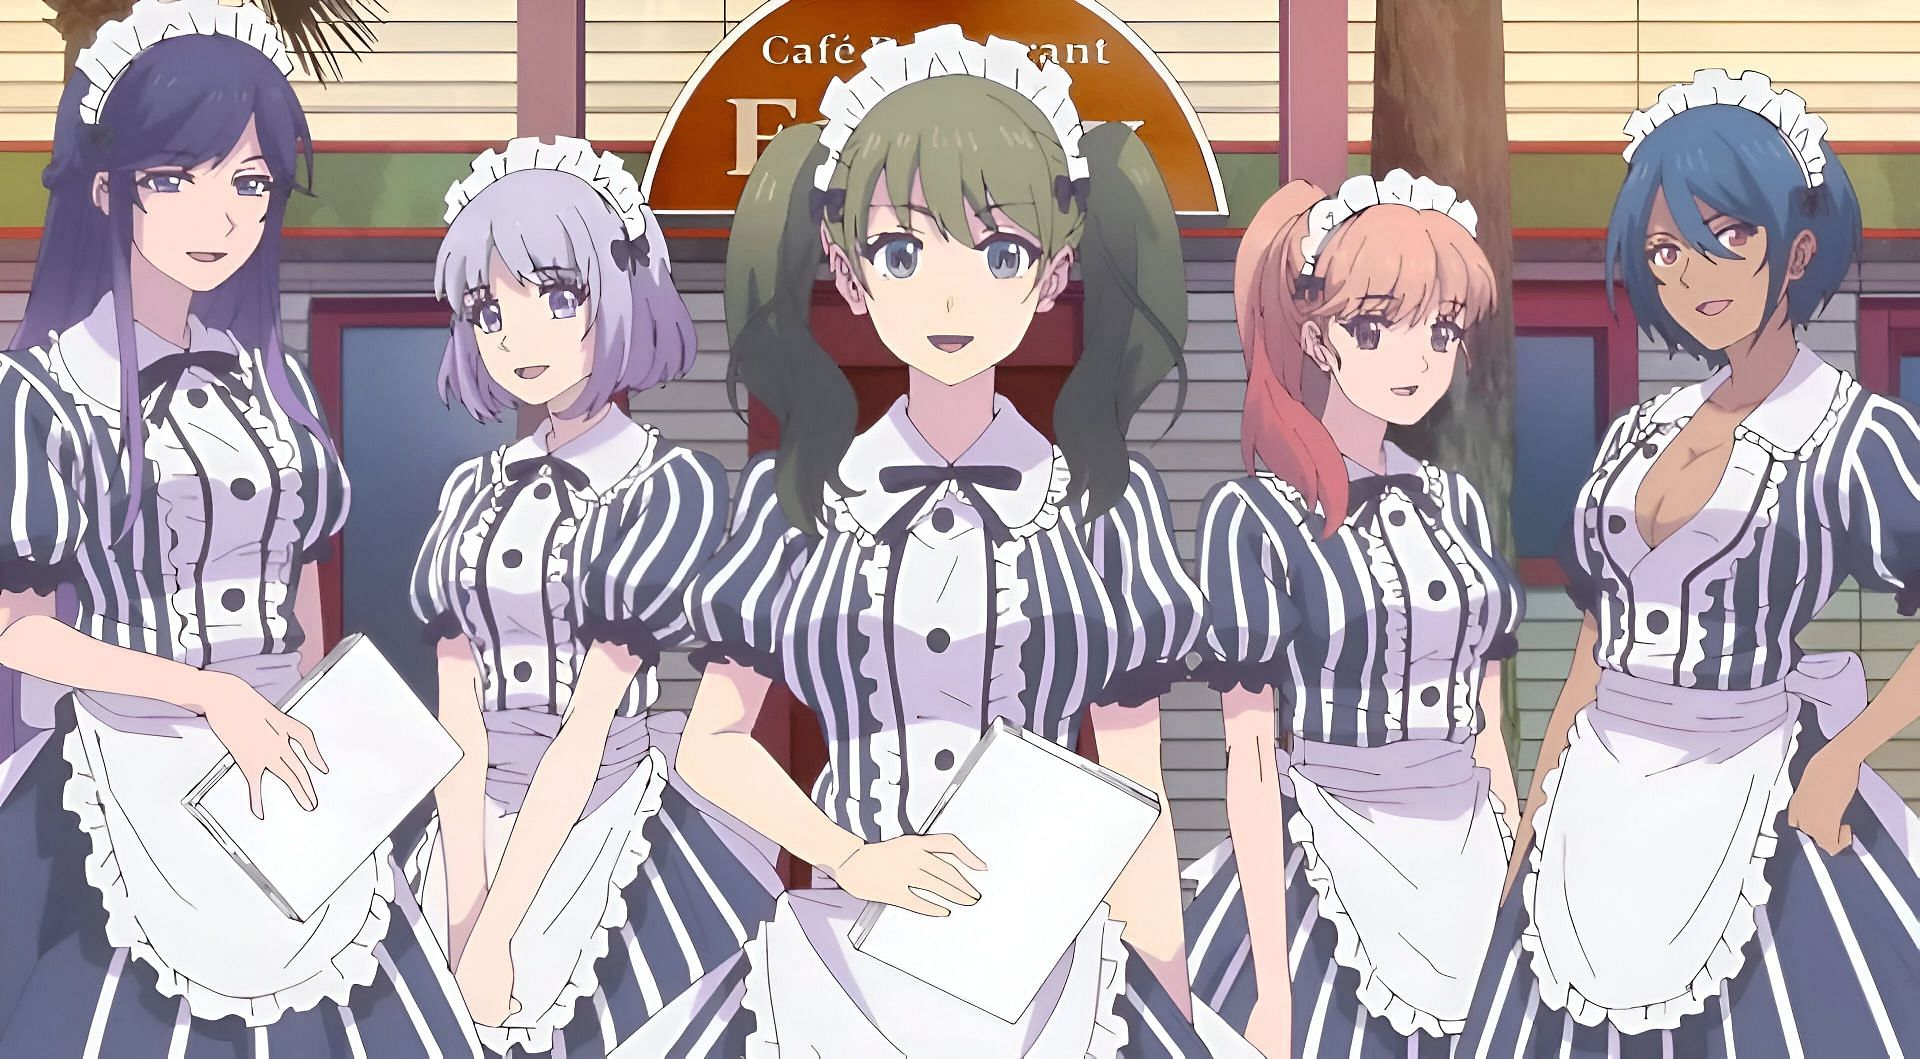 The maids of the rival caf&eacute; Caf&eacute; Family (Image via Tezuka Productions)